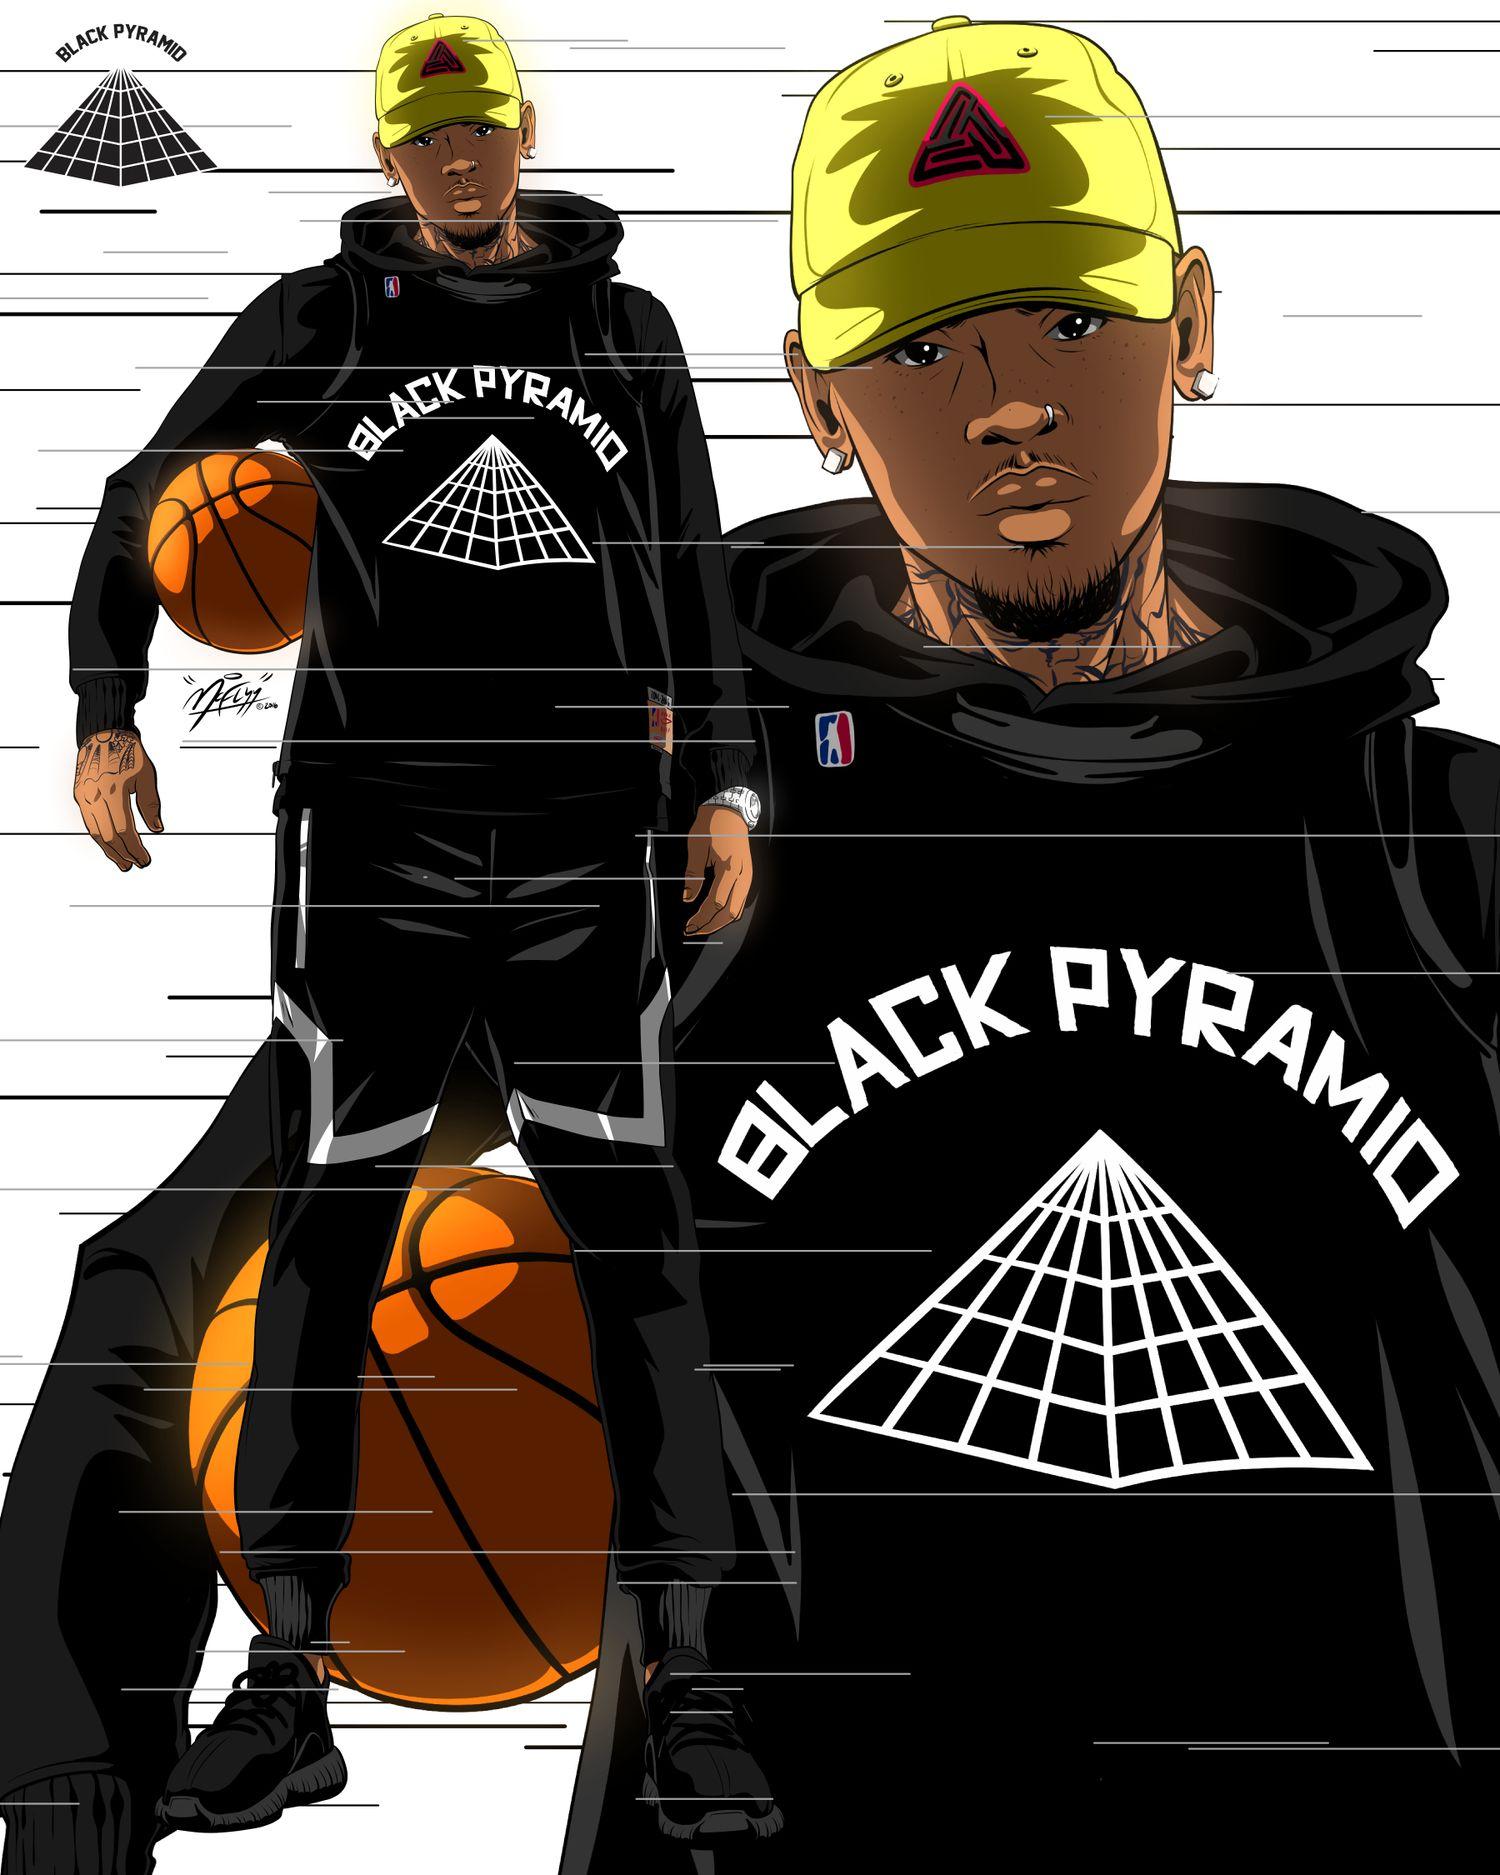 Black Pyramid Chris Brown Logo - CHRIS BROWN & COMPANY